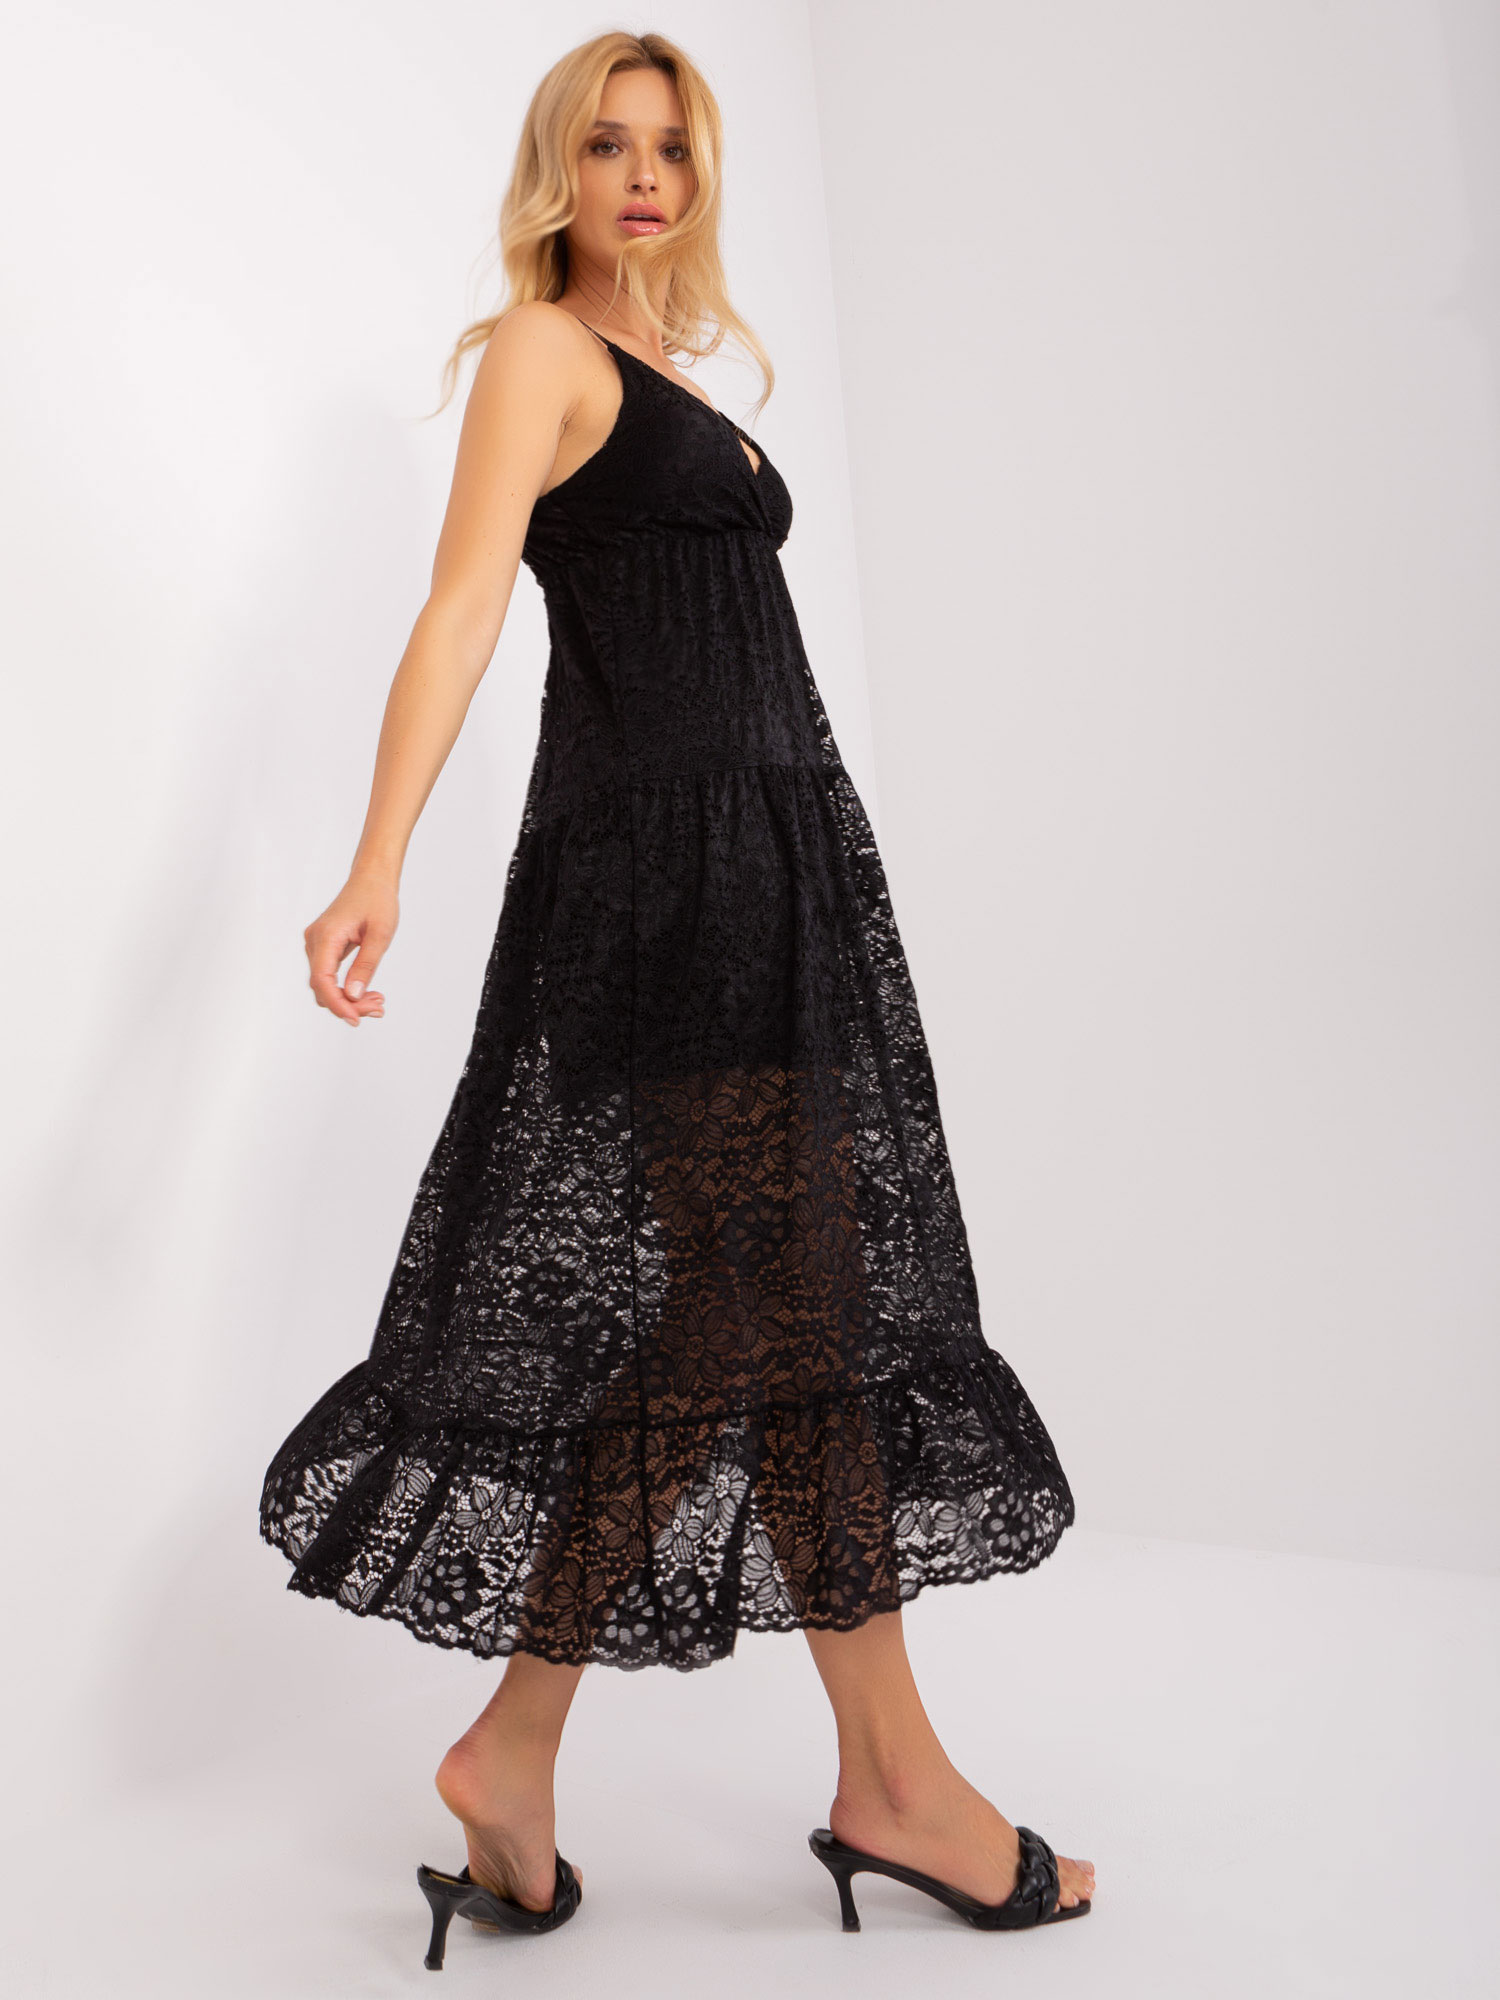 Black midi dress with frills by OCH BELLA